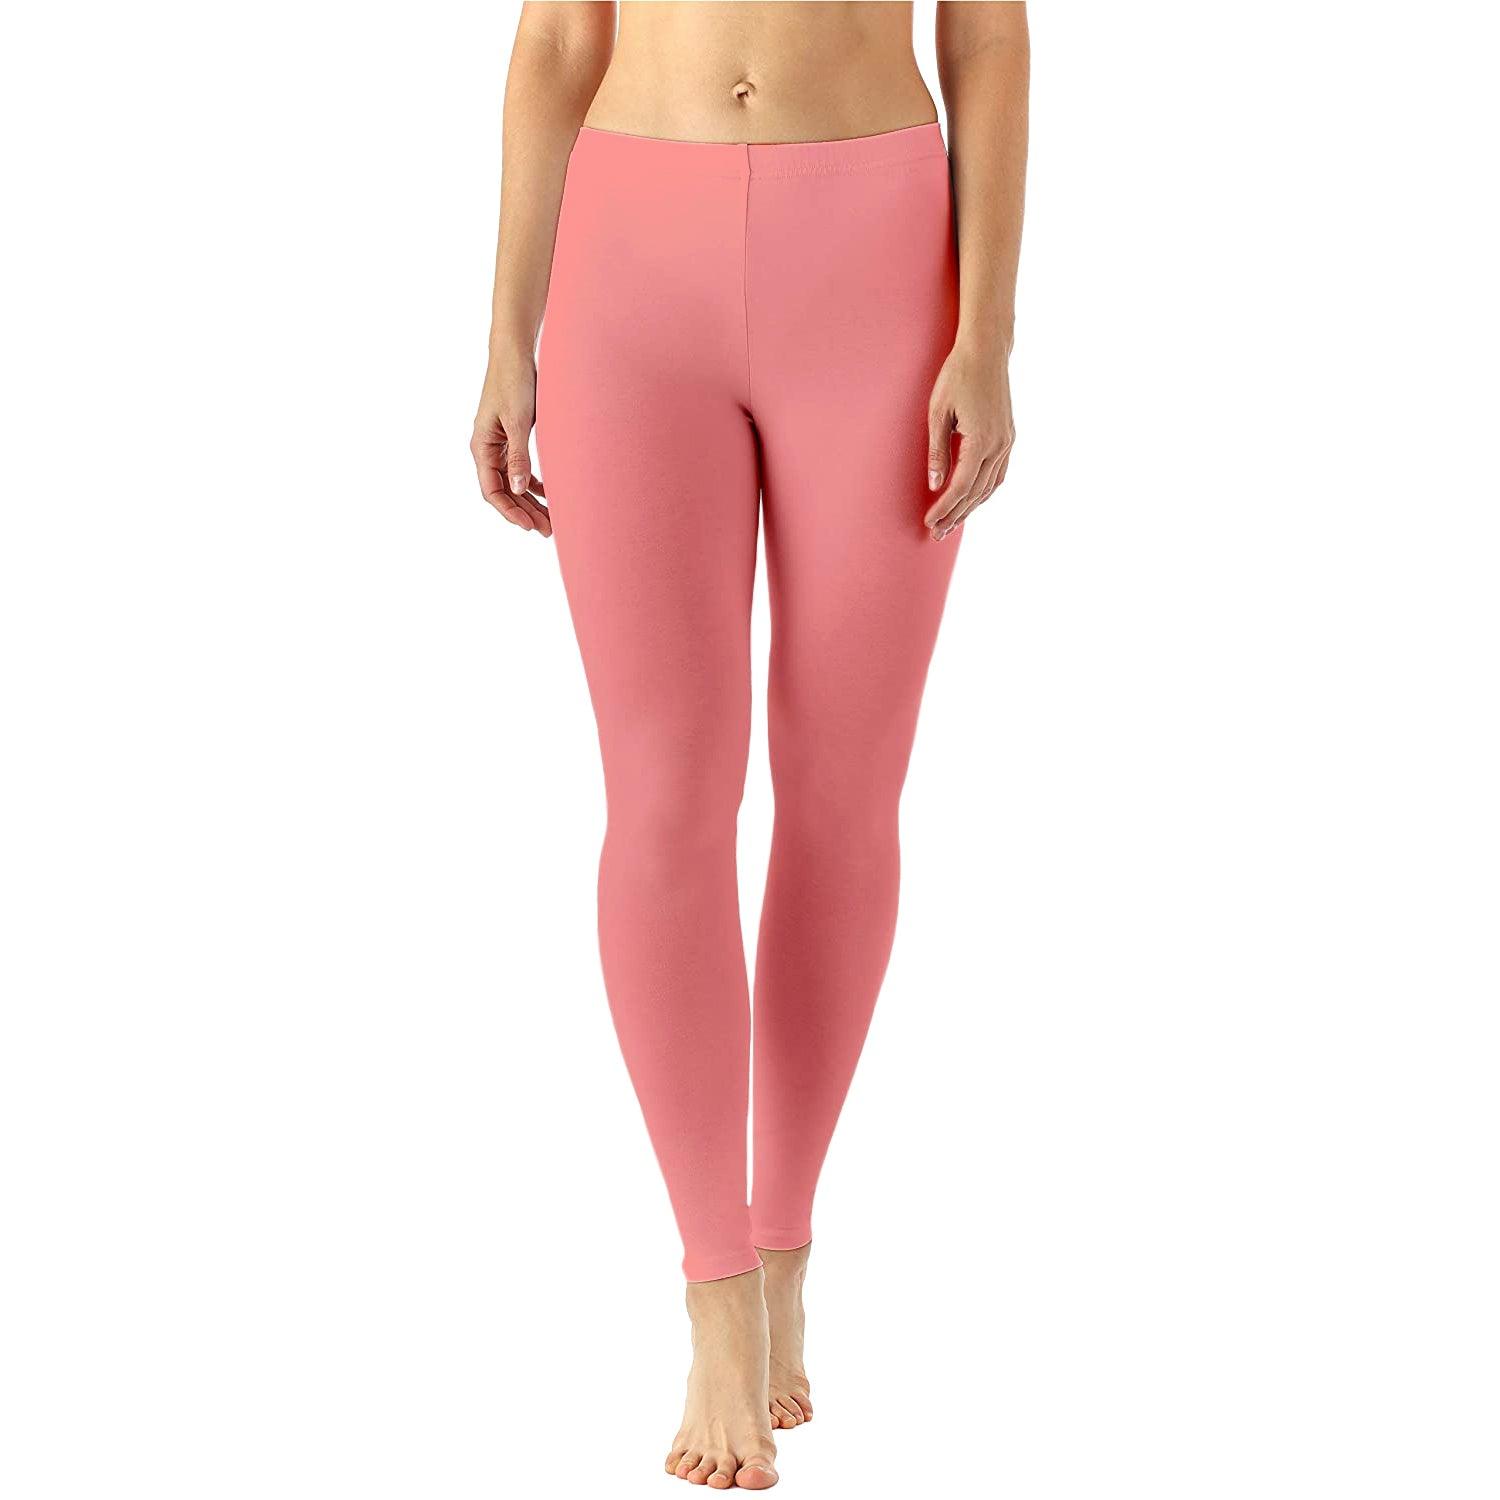 Zindwear Women's Cotton Soft Plain Summer Stretchy Ankle Length Leggings (One Size, Peach Pink) - Walgrow.com